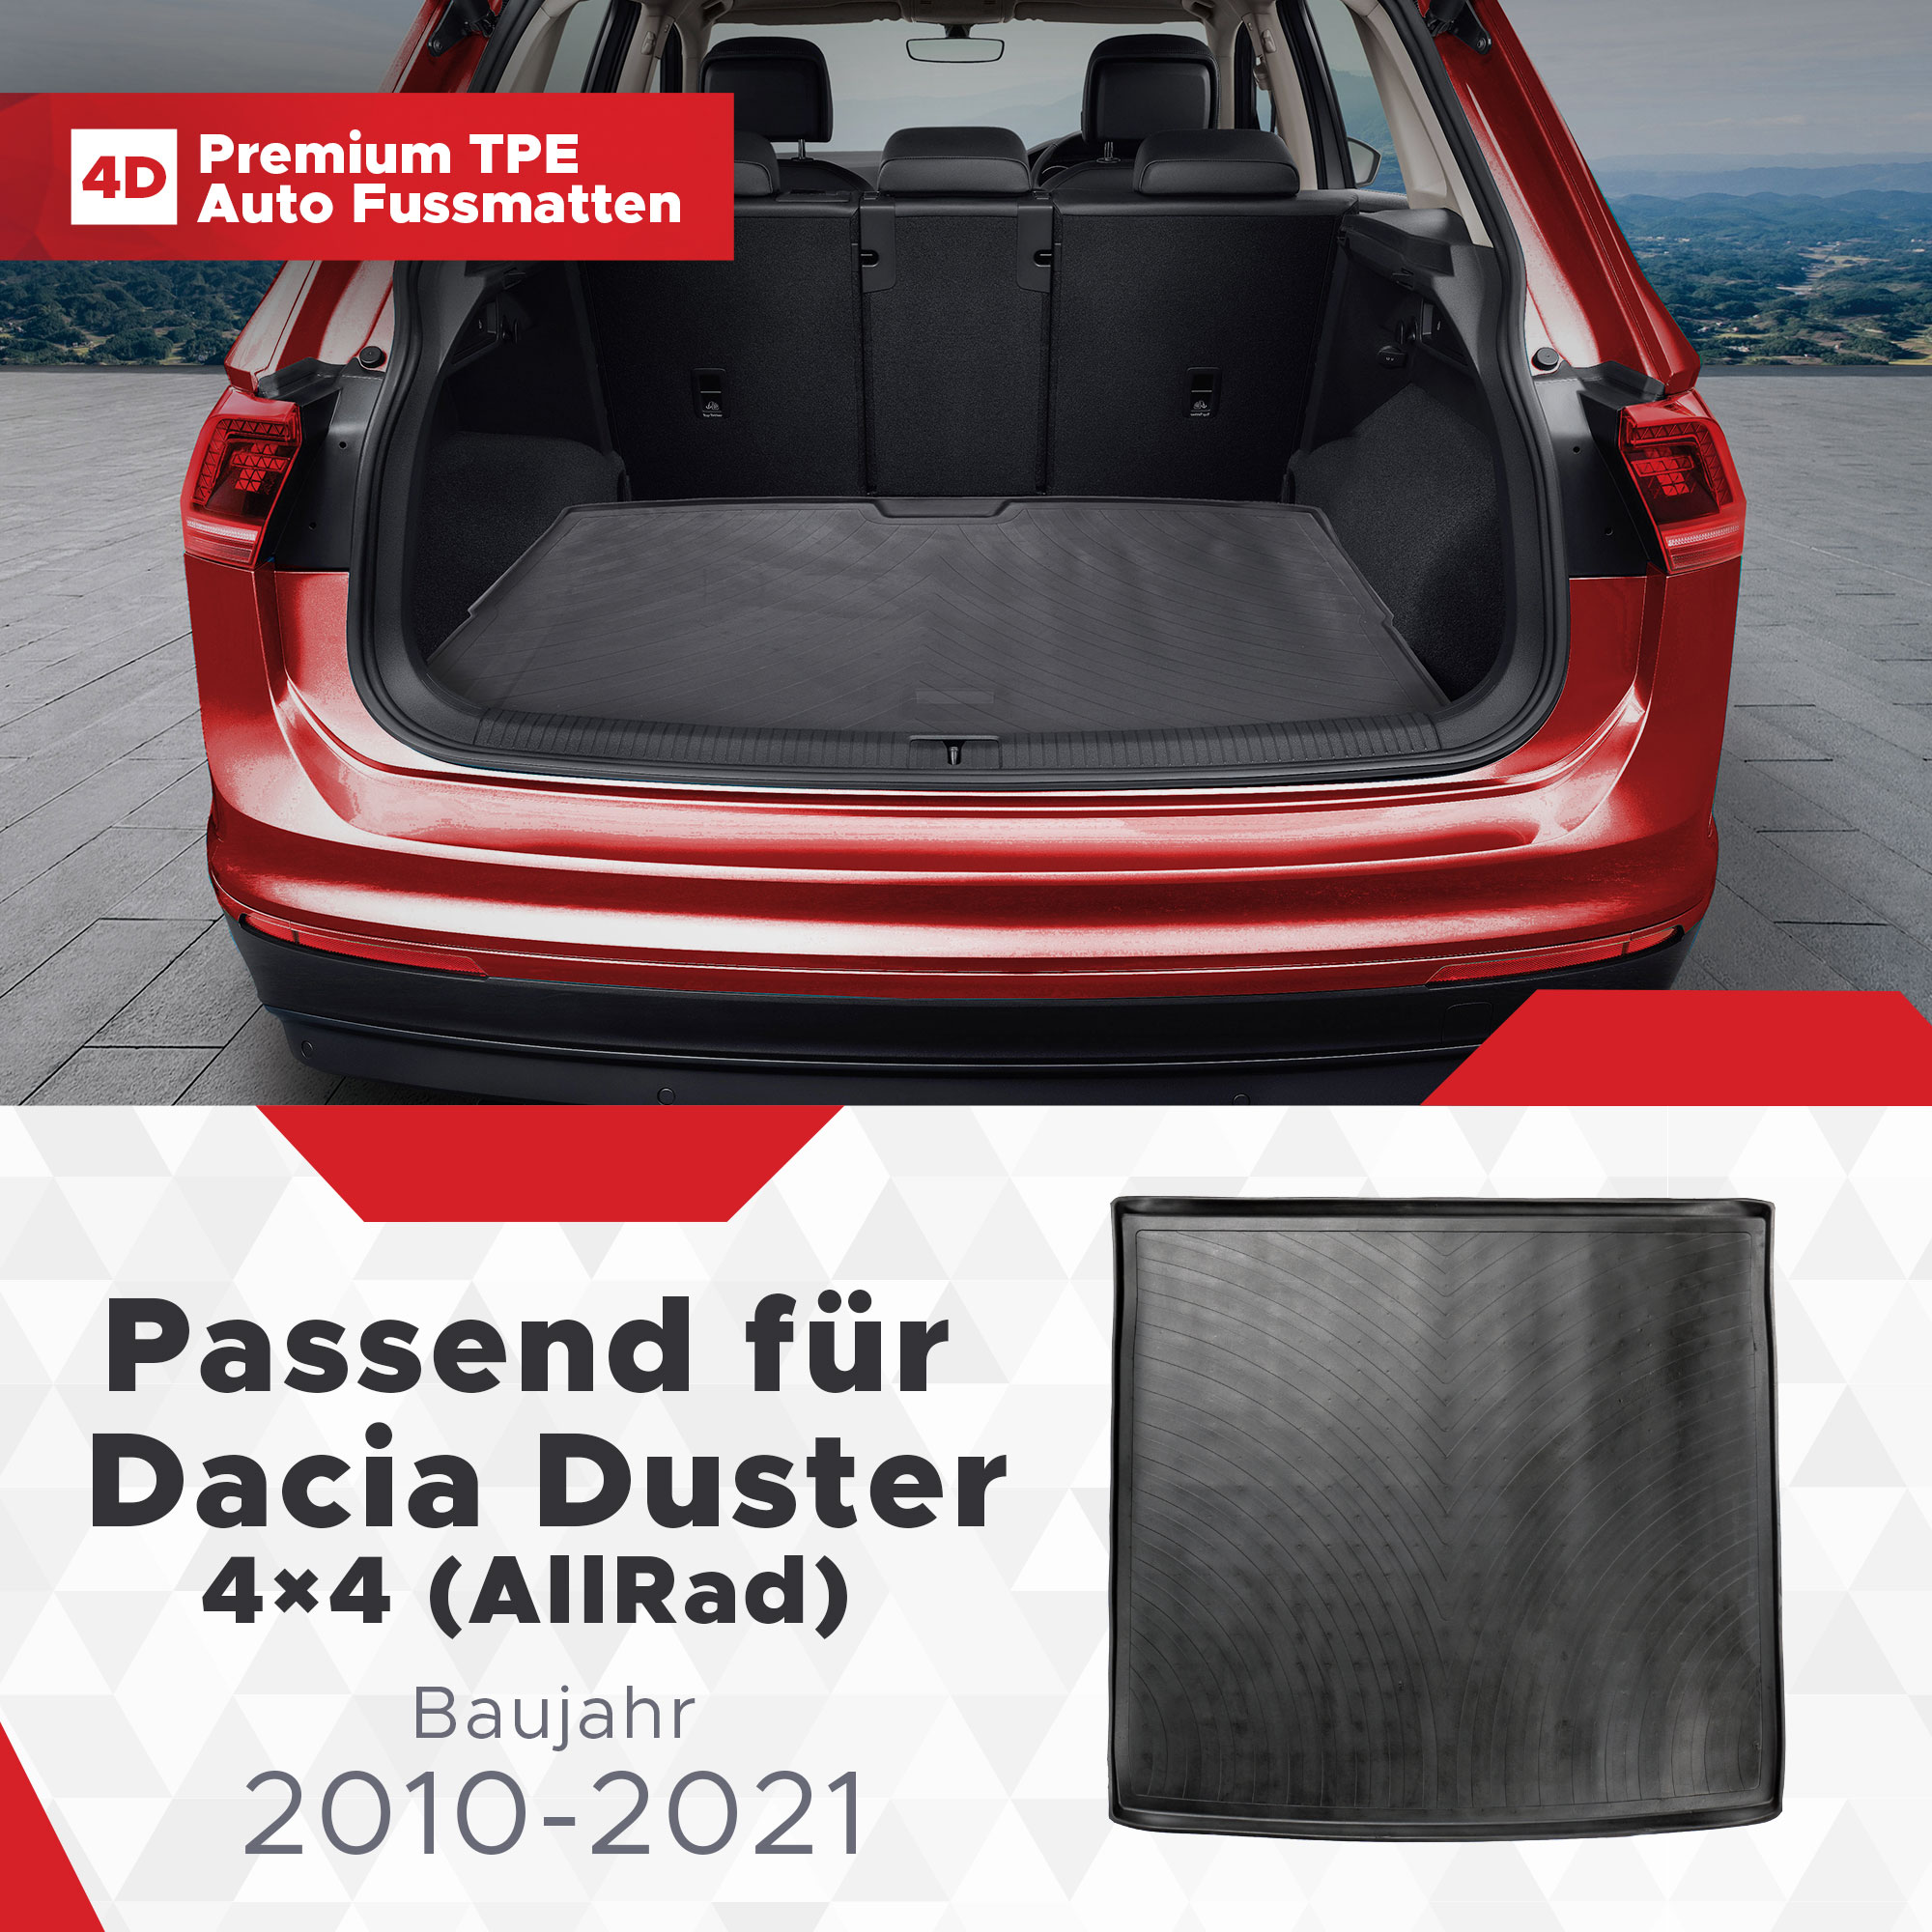 4D Kofferraummatte für Dacia Duster 4x4 Allrad 2010-2021